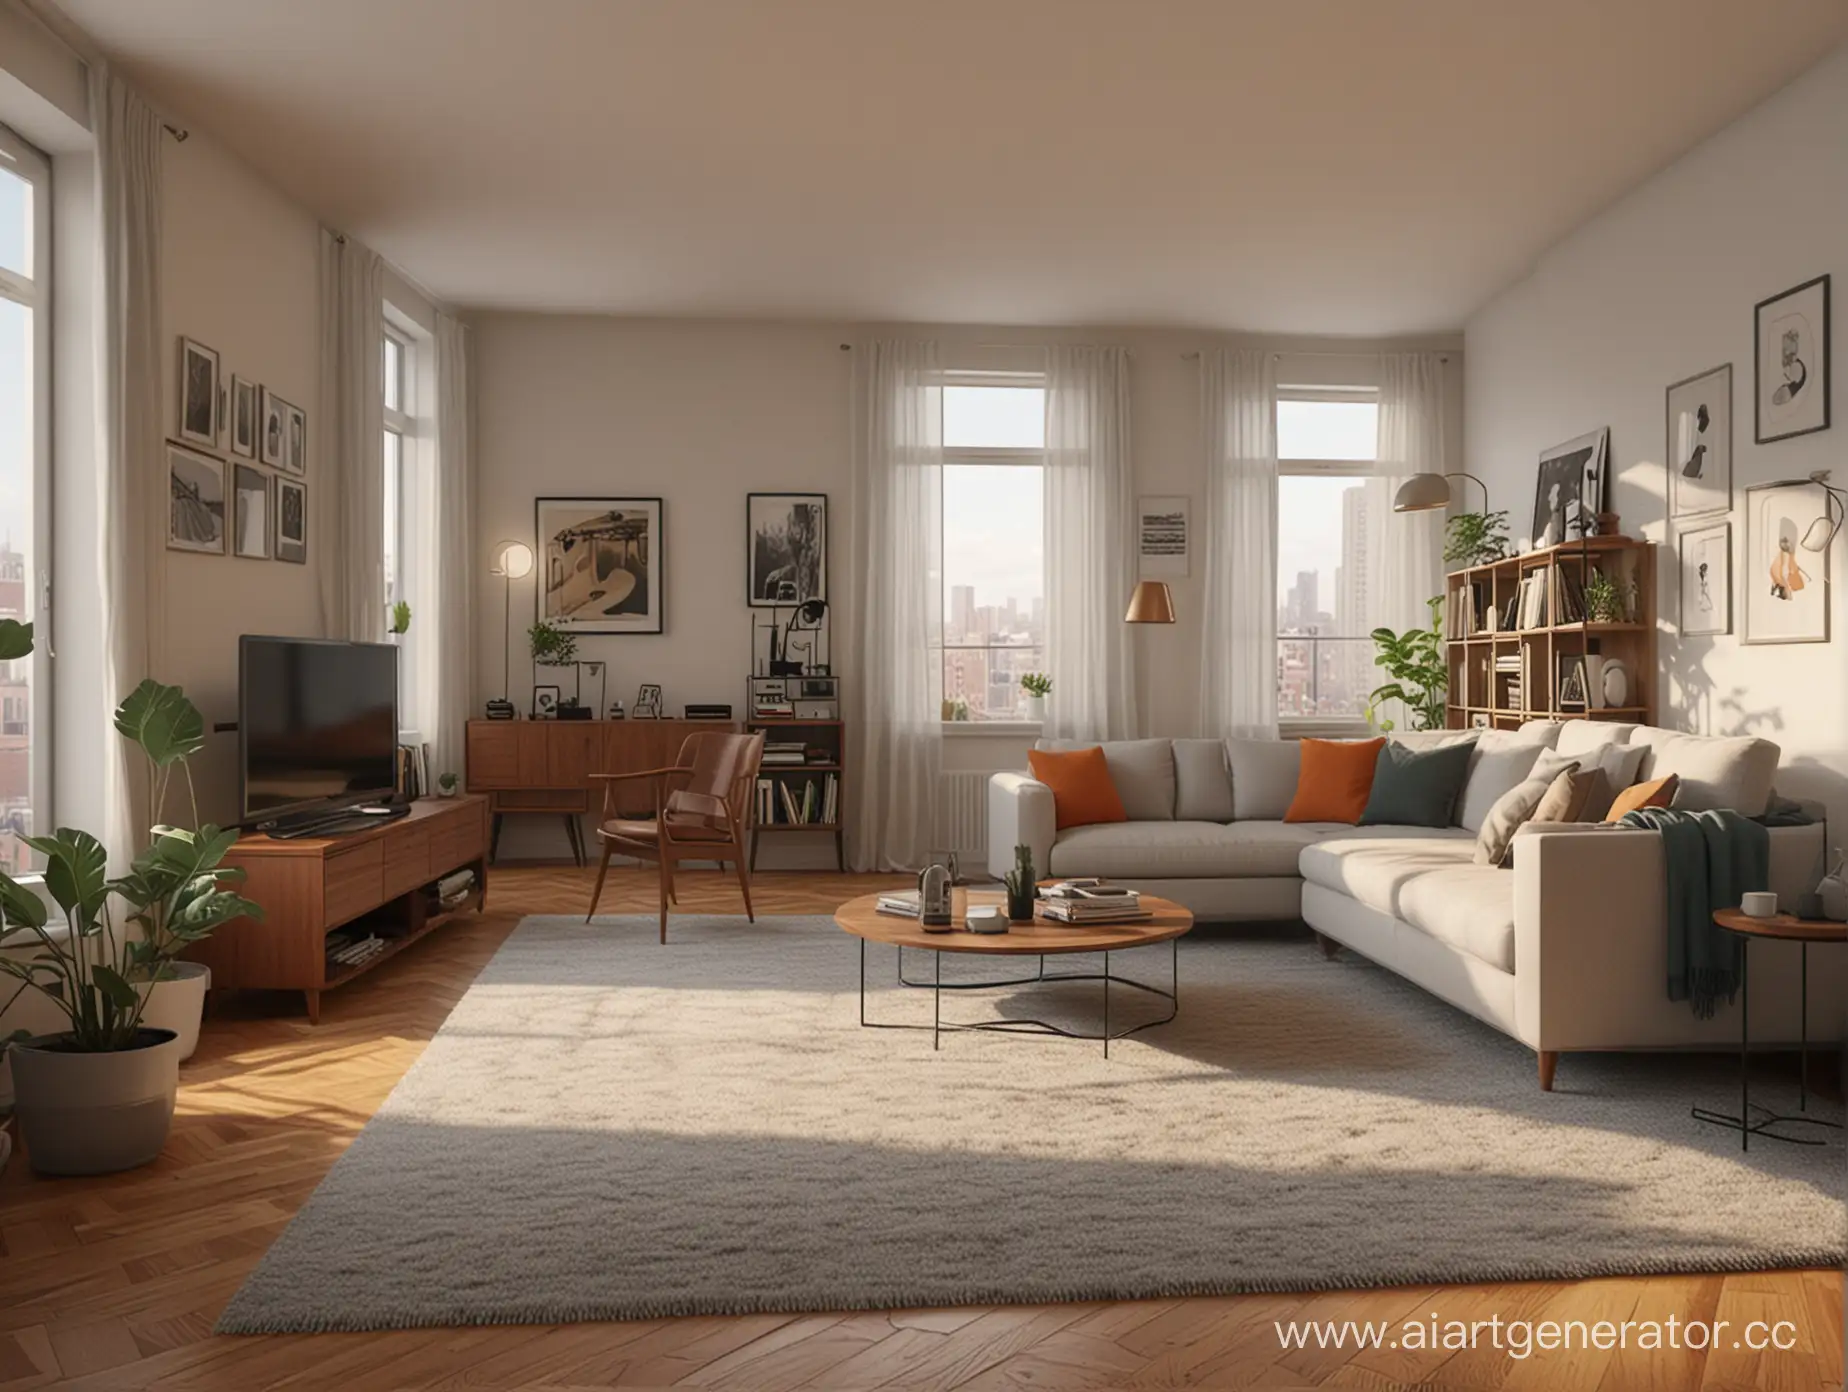 Realistic-4K-Apartment-Interior-with-Modern-Decor